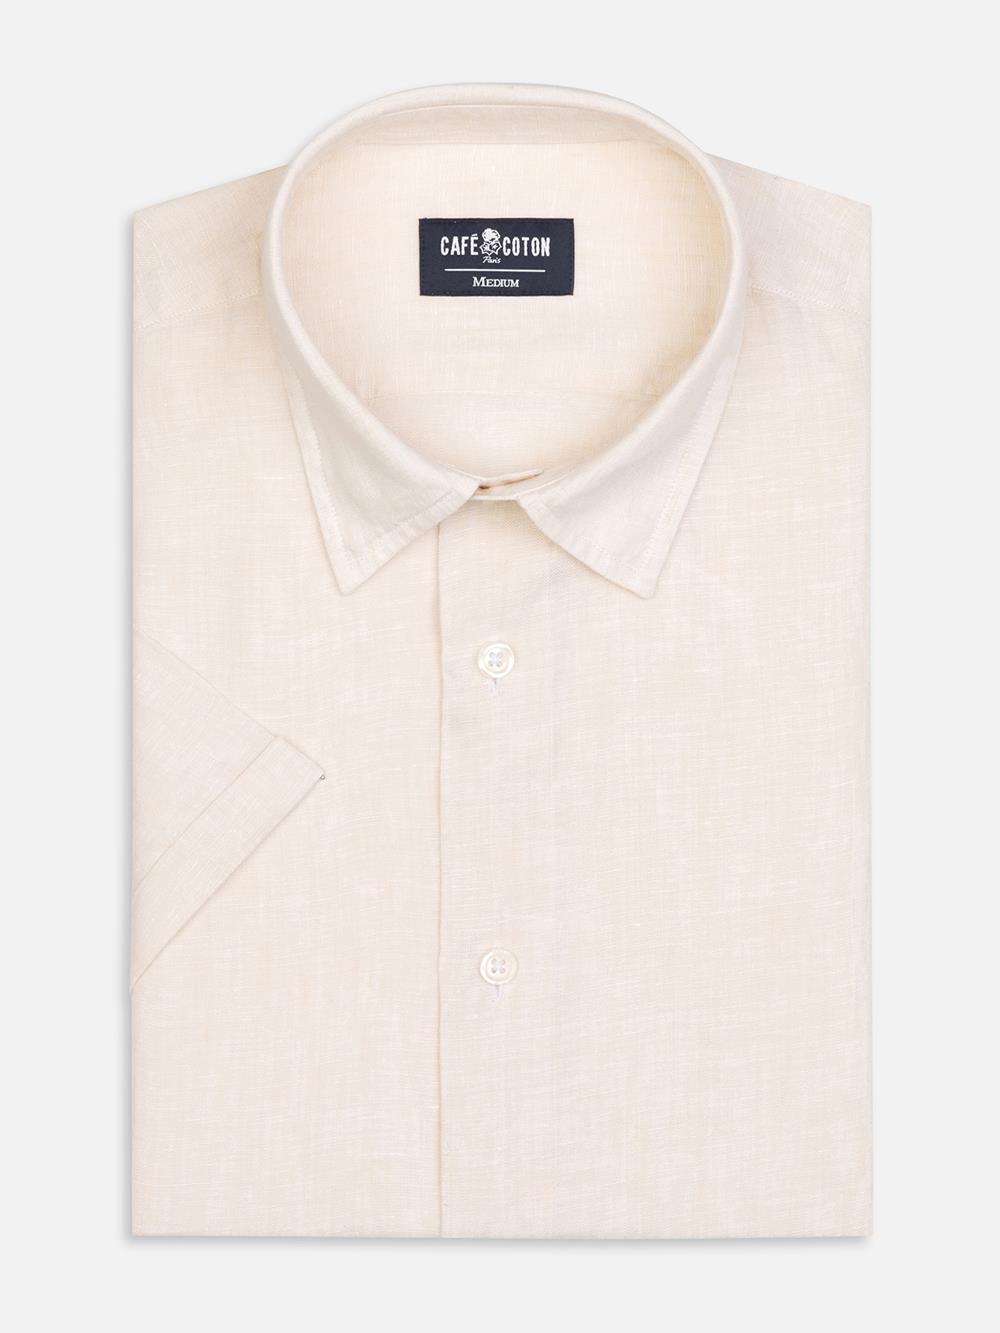 Olaf sand linen shortsleeves shirt 